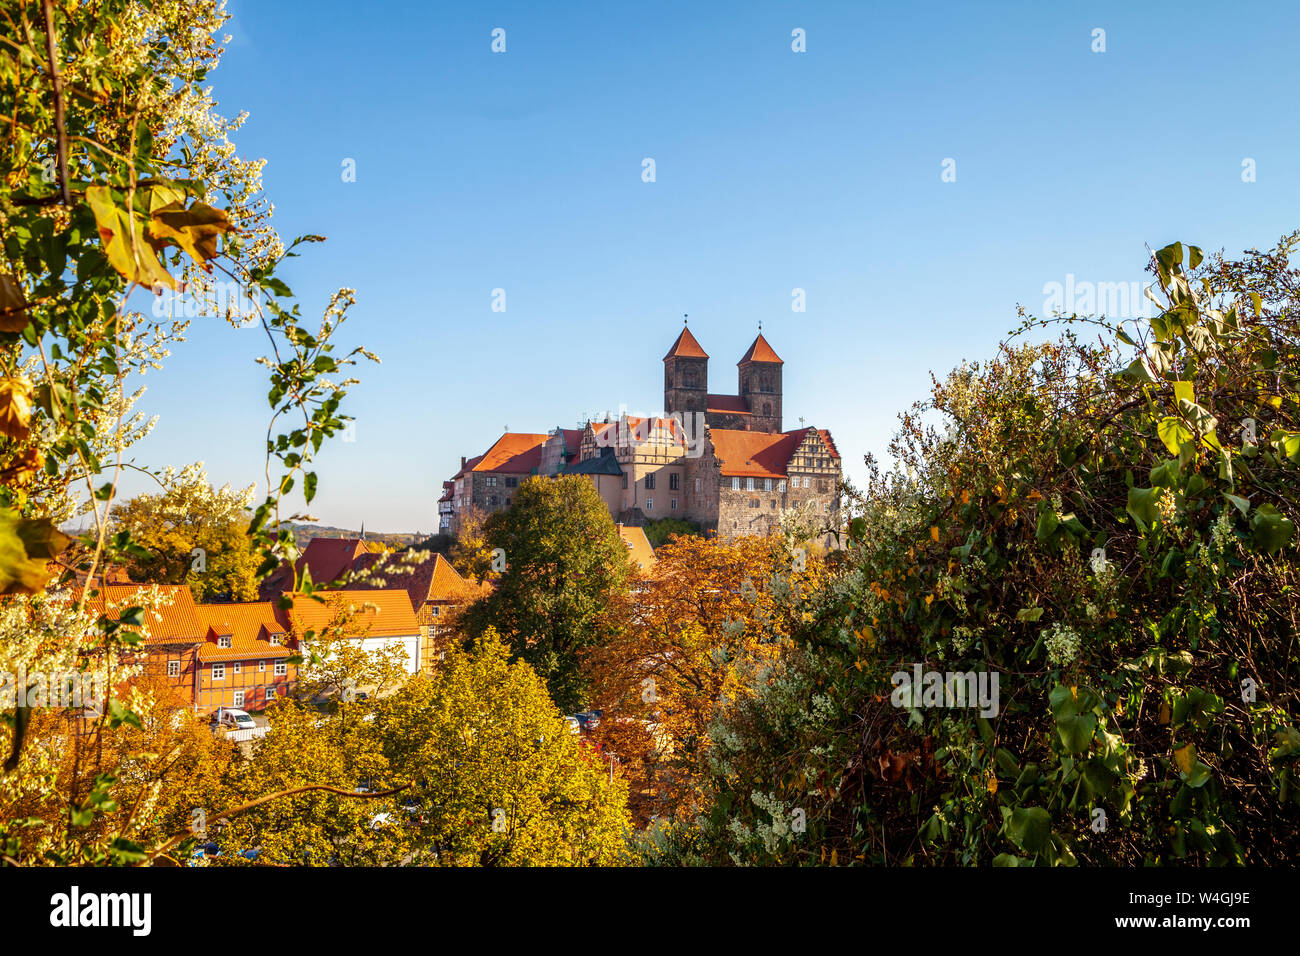 Castle of Quedlinburg, Germany Stock Photo